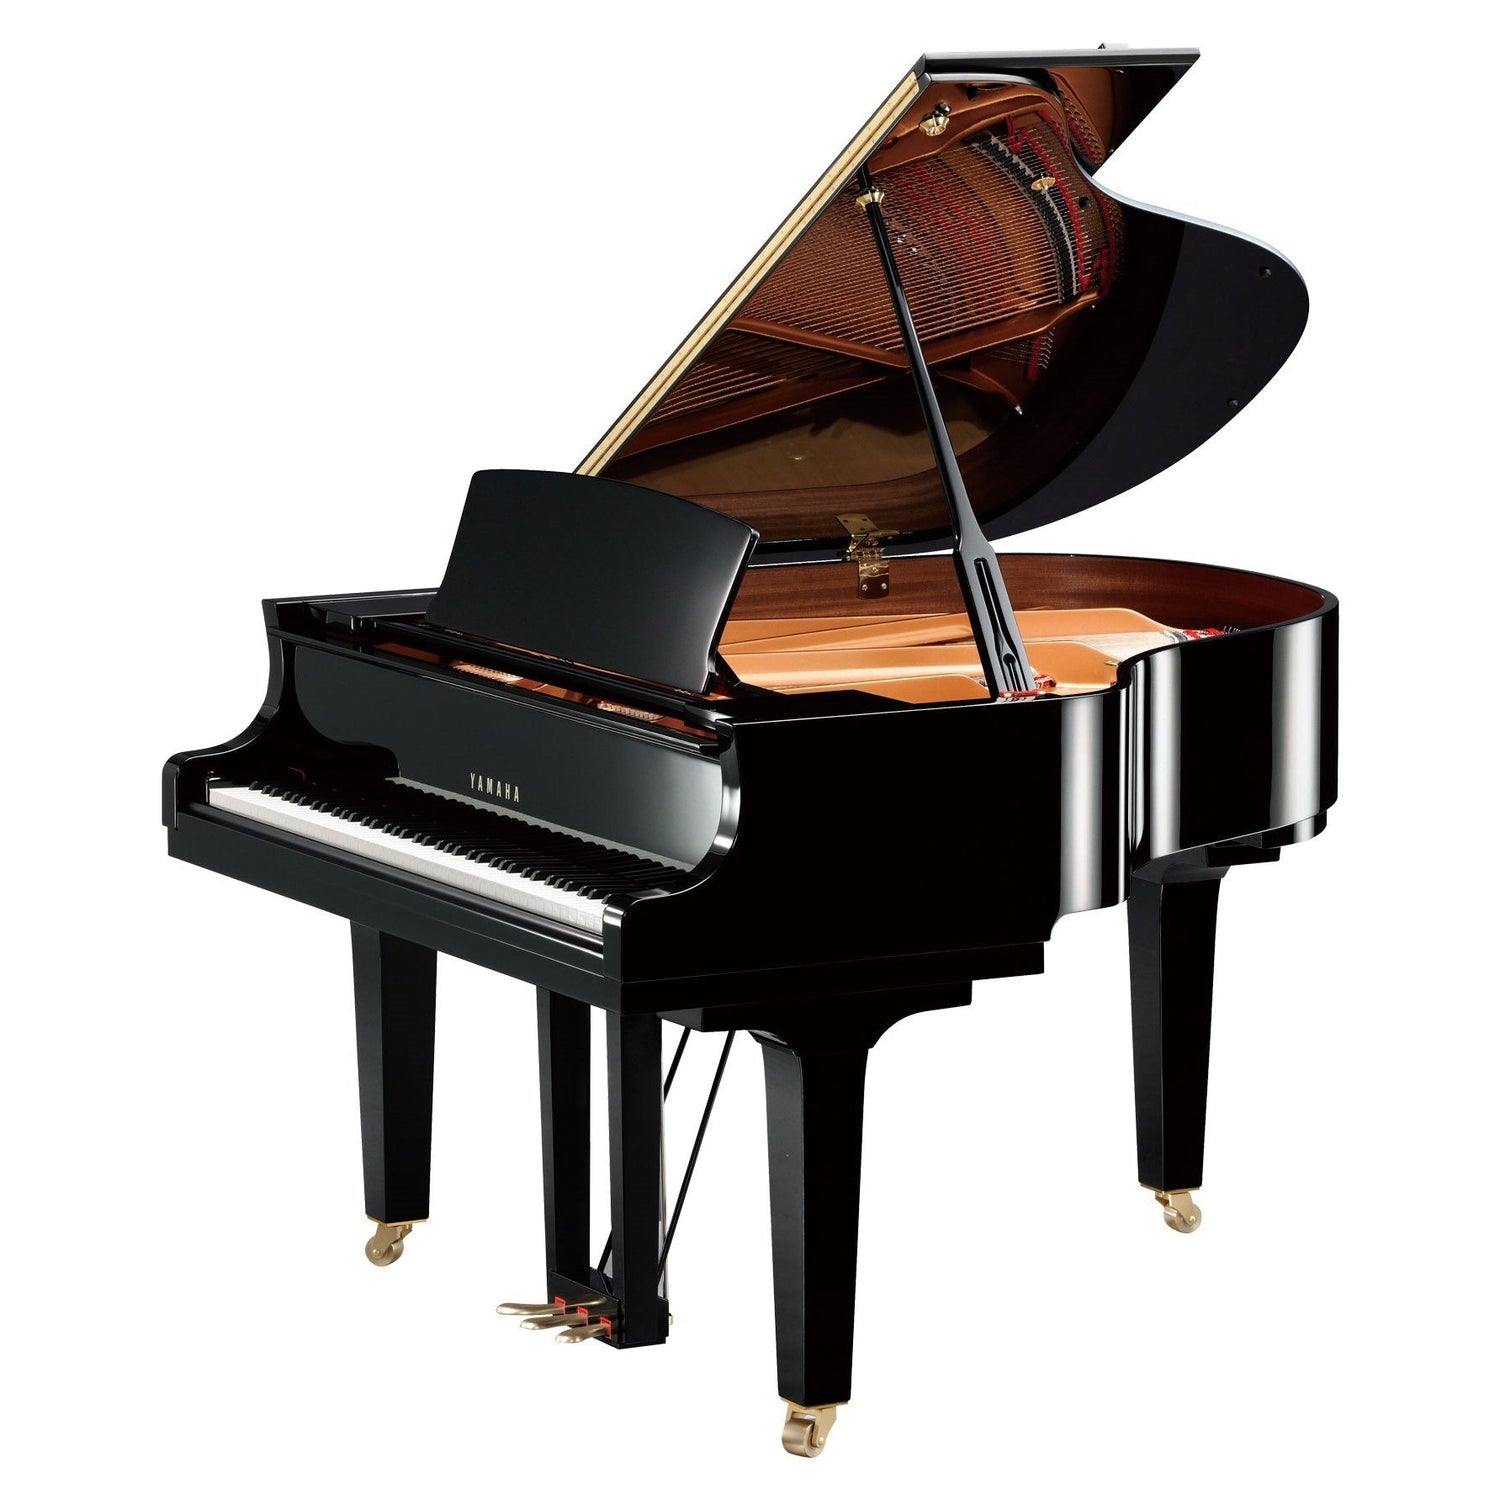 Piano Grand Yamaha CX Series